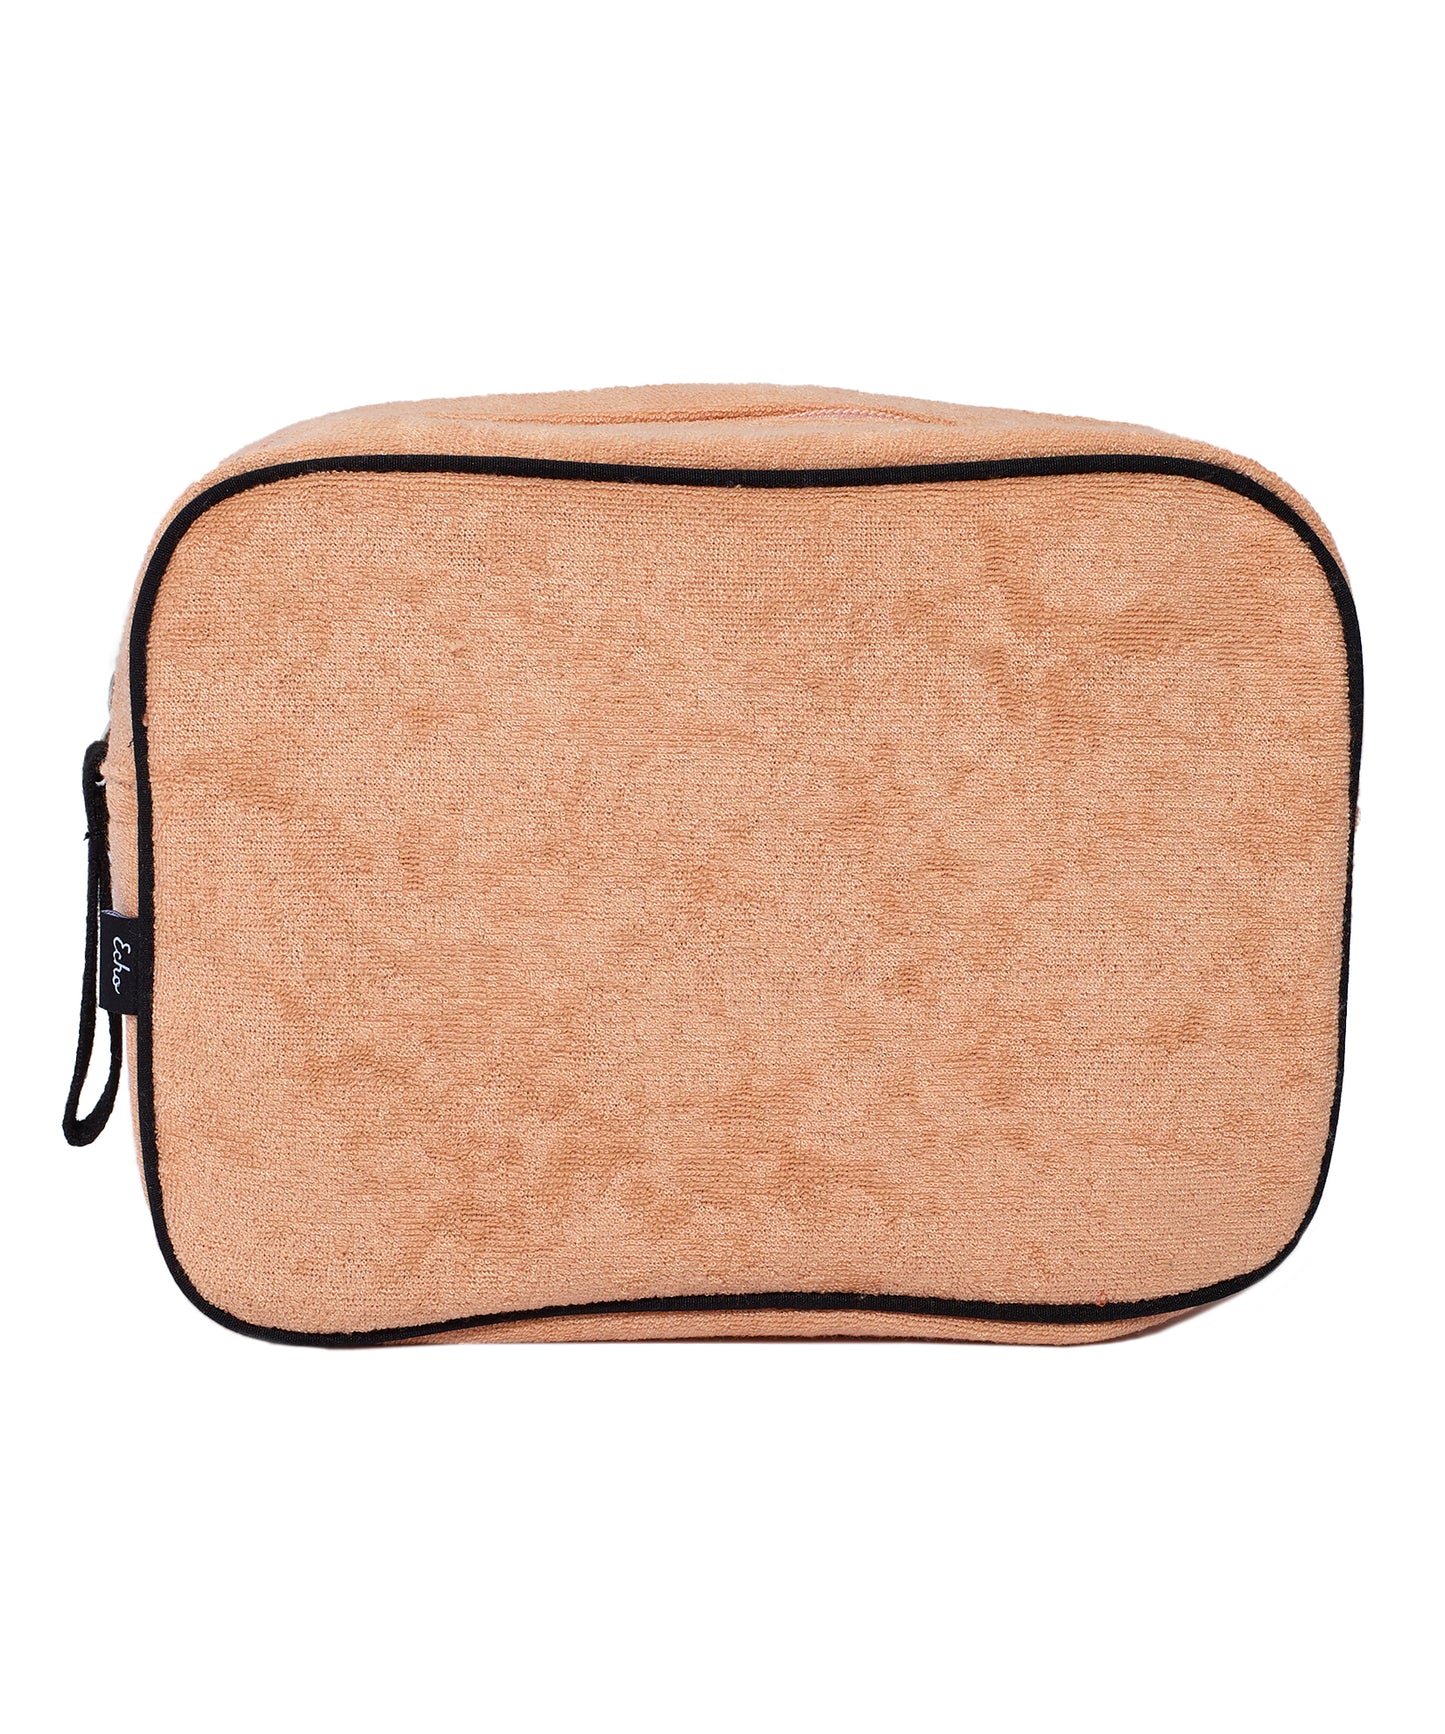 Terry Cosmetic Bag in color Semolina